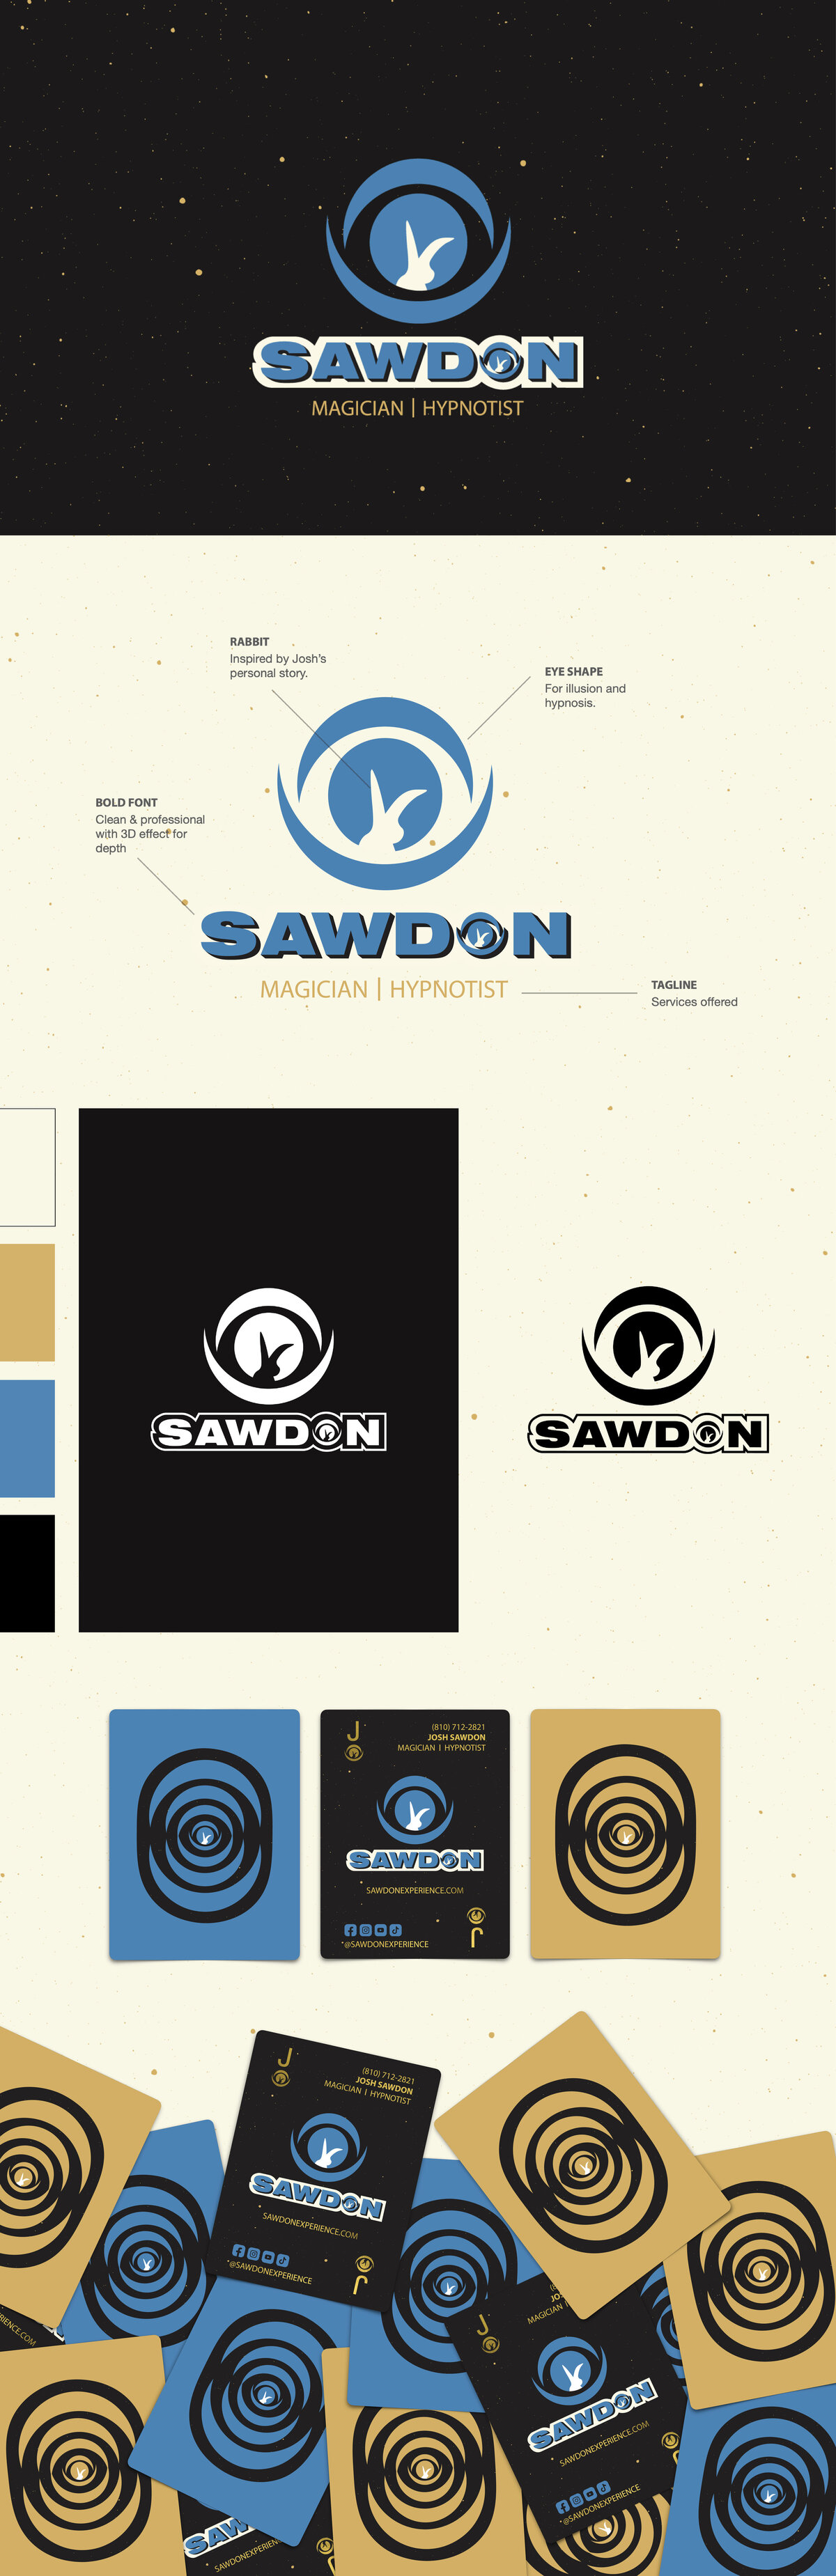 Sawdon-Behance-01